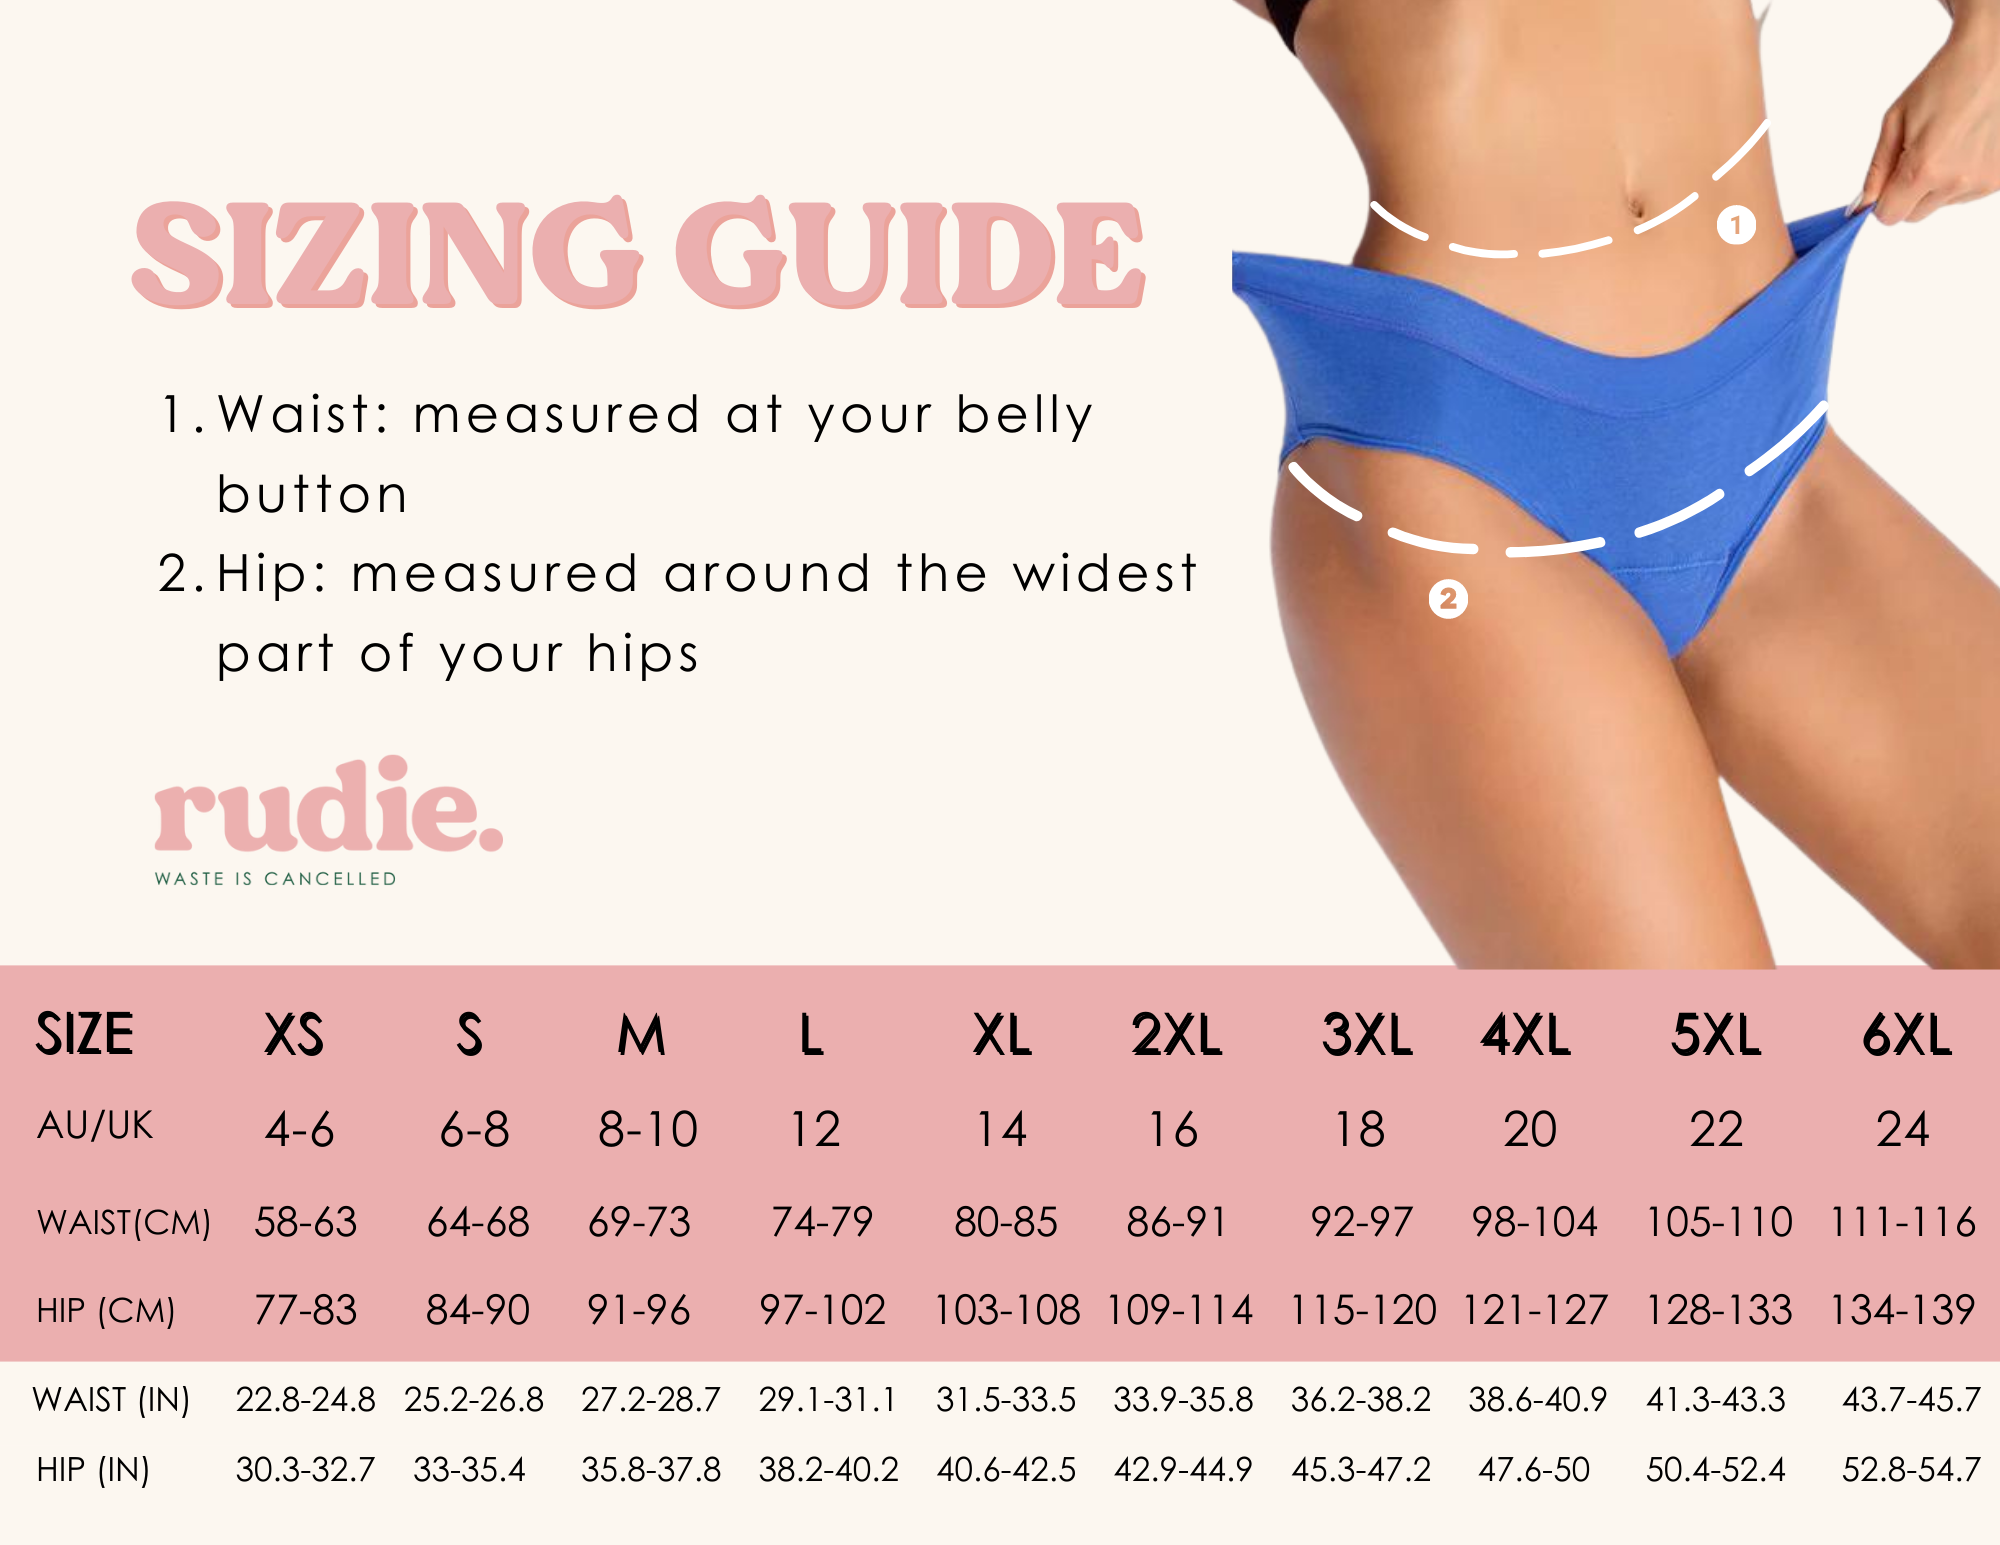 Washable period underwear sizes guide